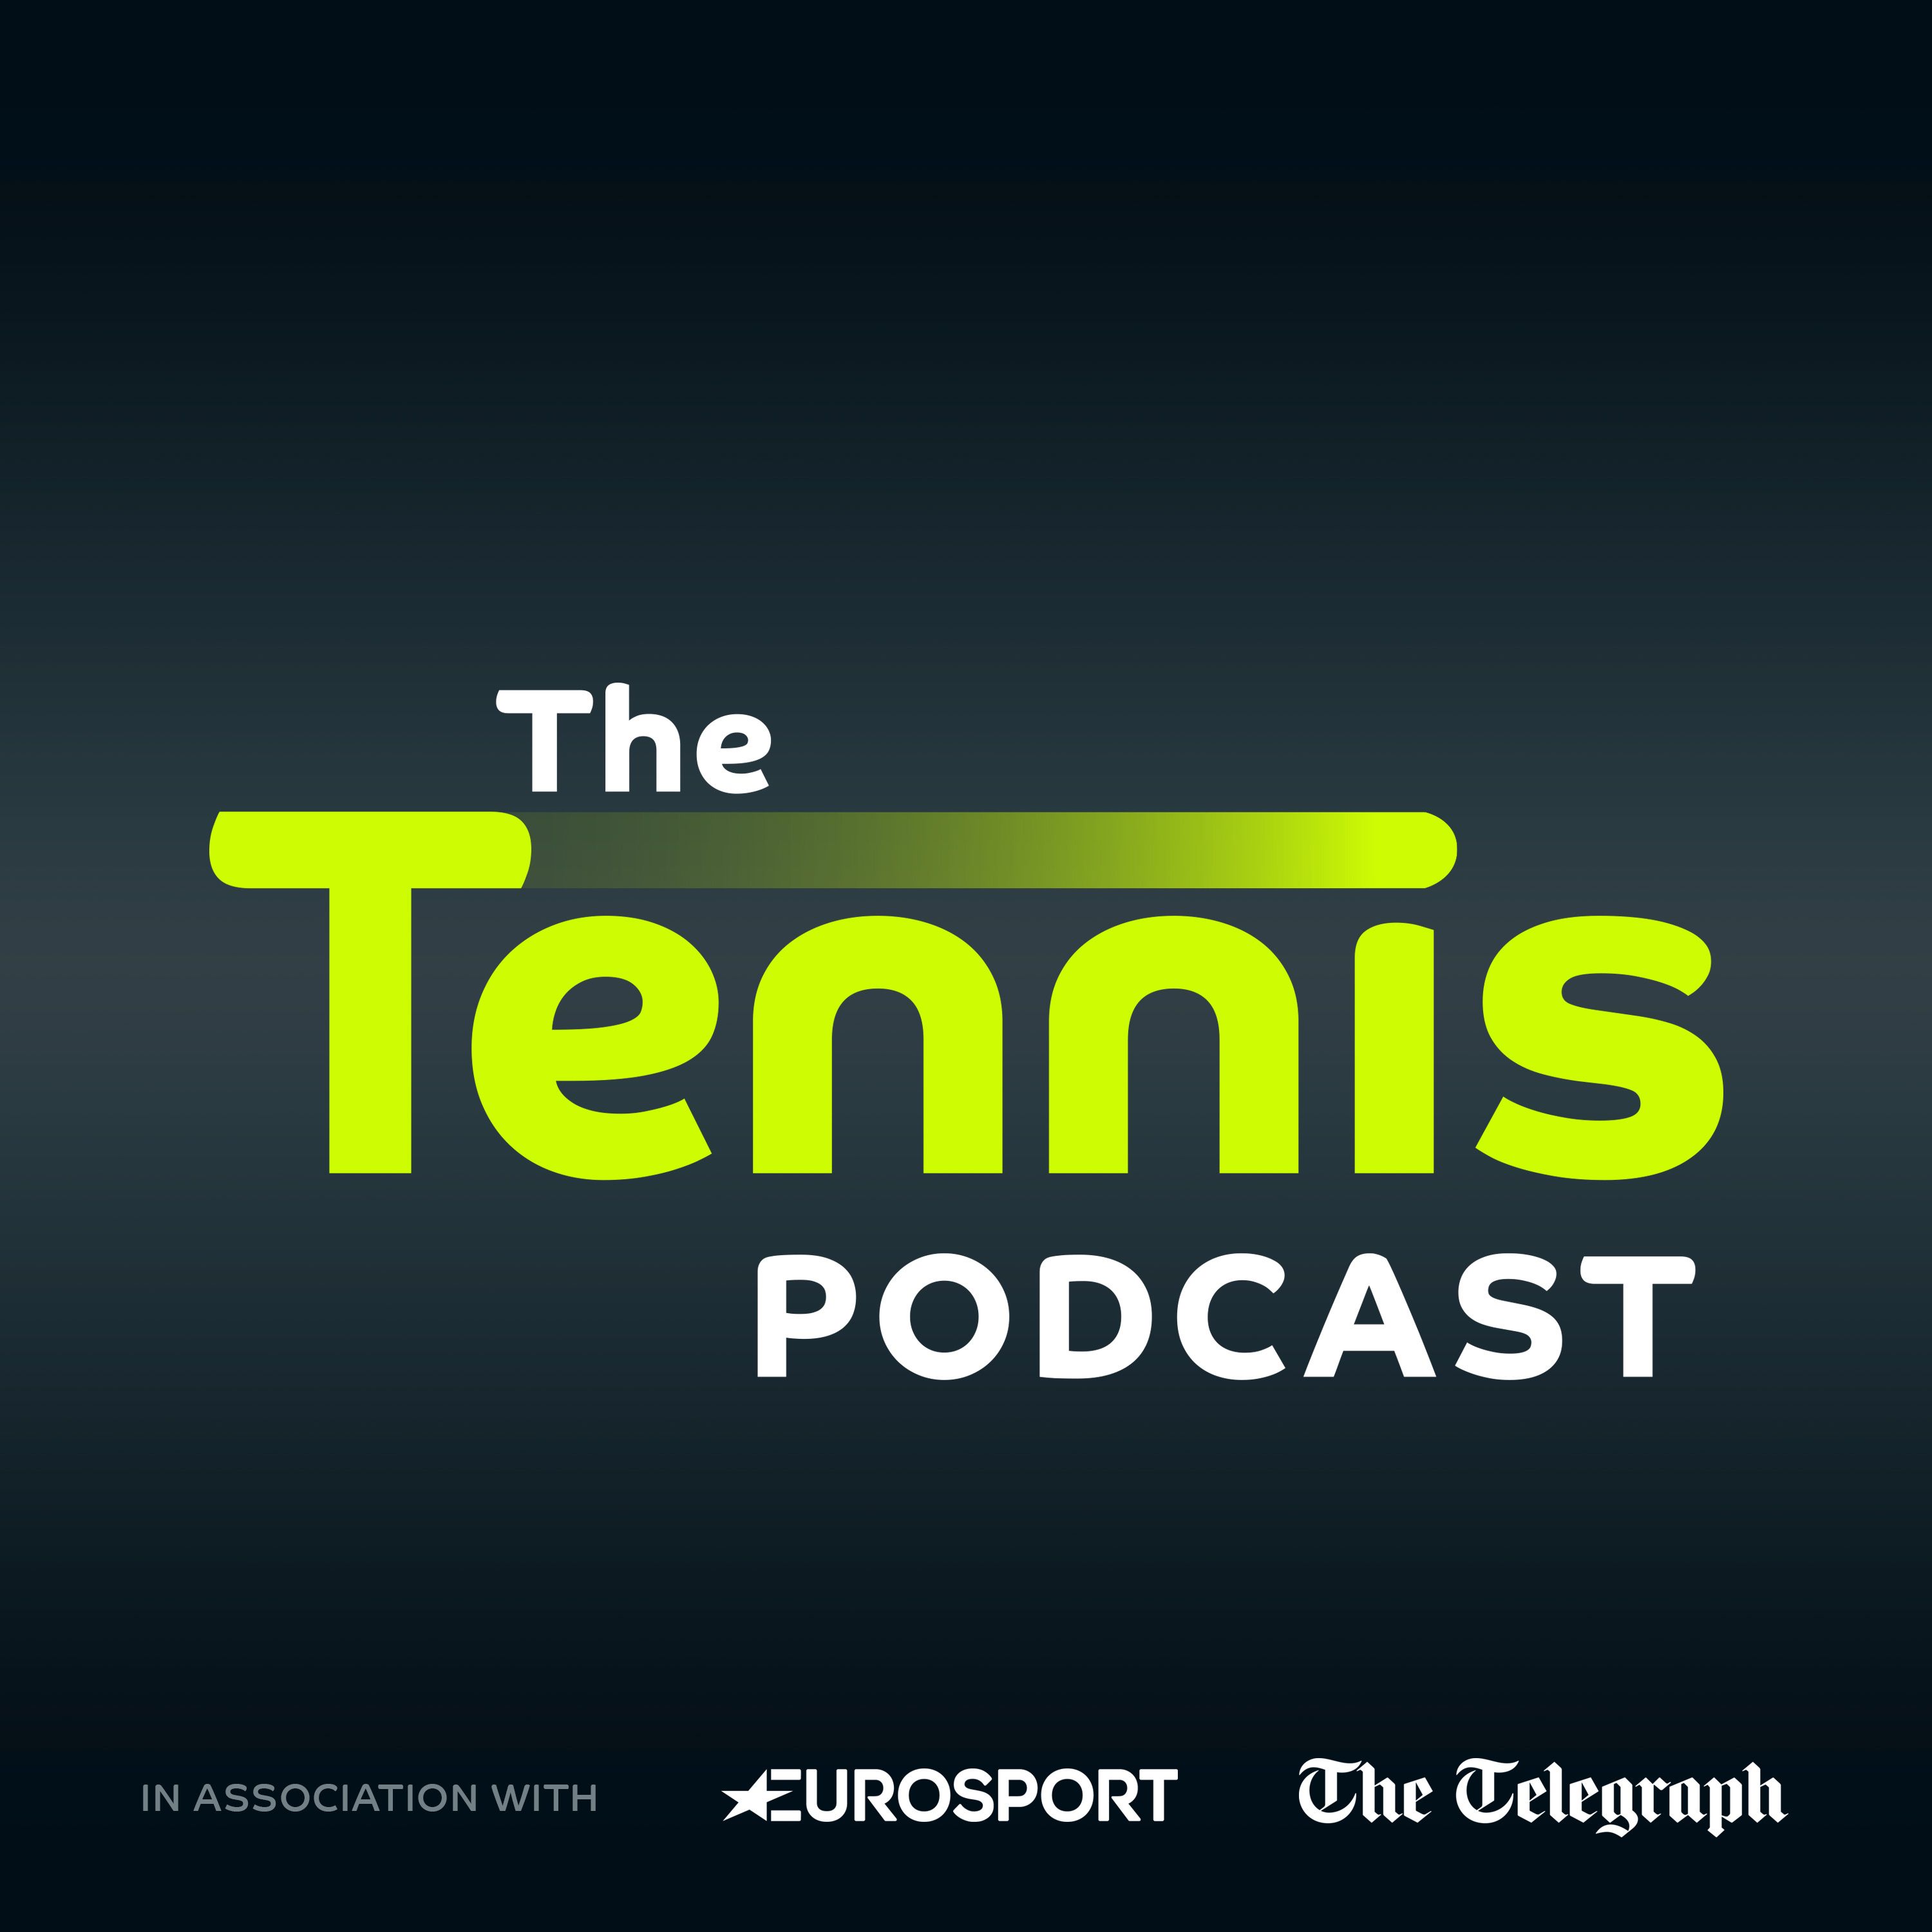 Monte Carlo, Djokovic / Vajda Back Together, Kyle Edmund’s New Ground, Wimbledon Queue Continued, Greatest Achievements On Worst Surfaces